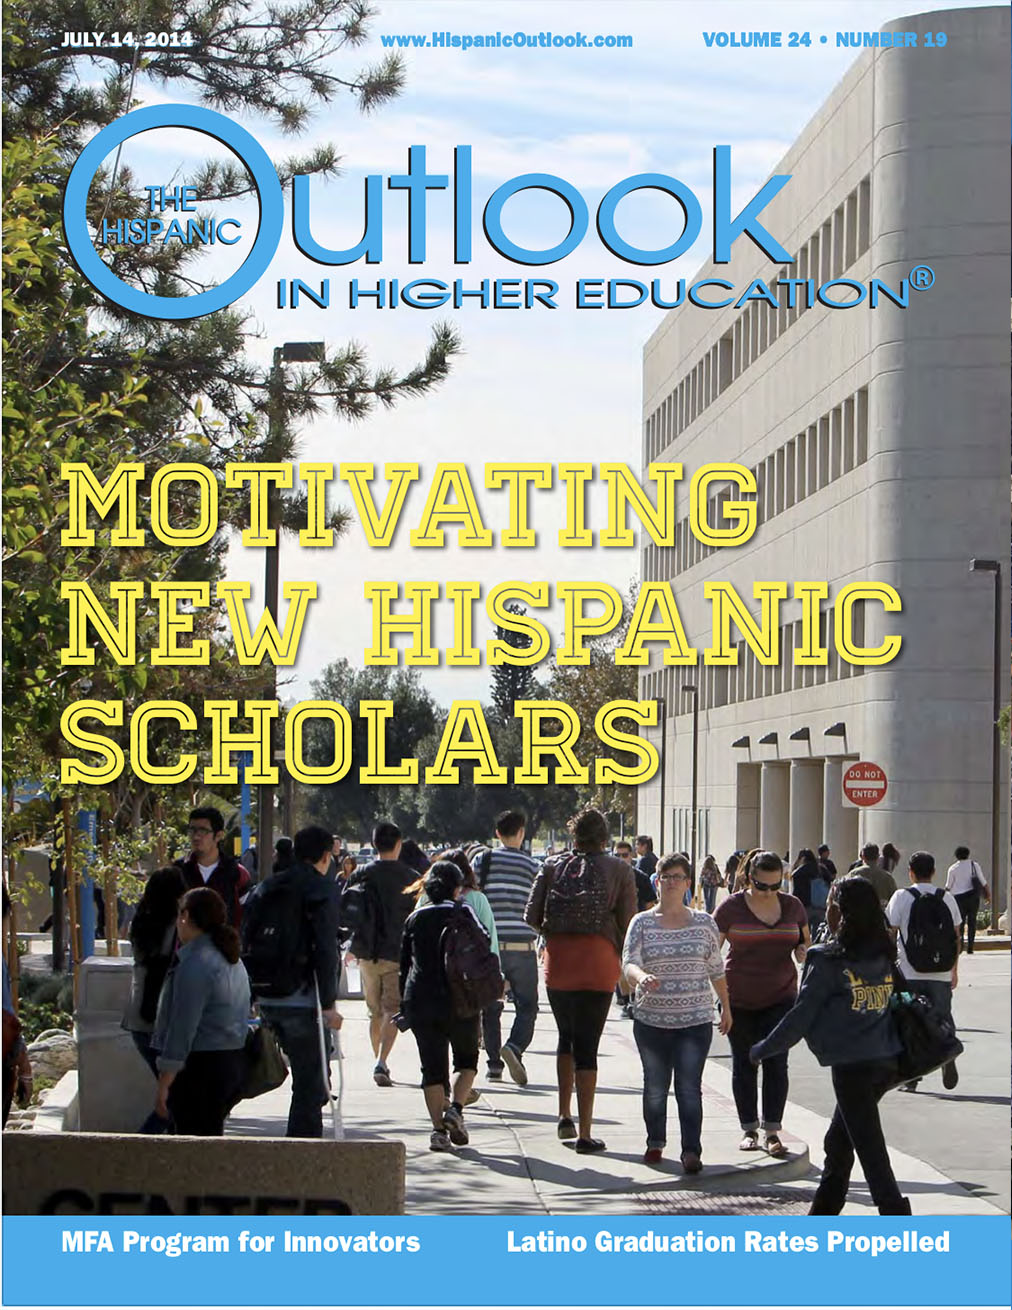 Motivating new hispanic scholars